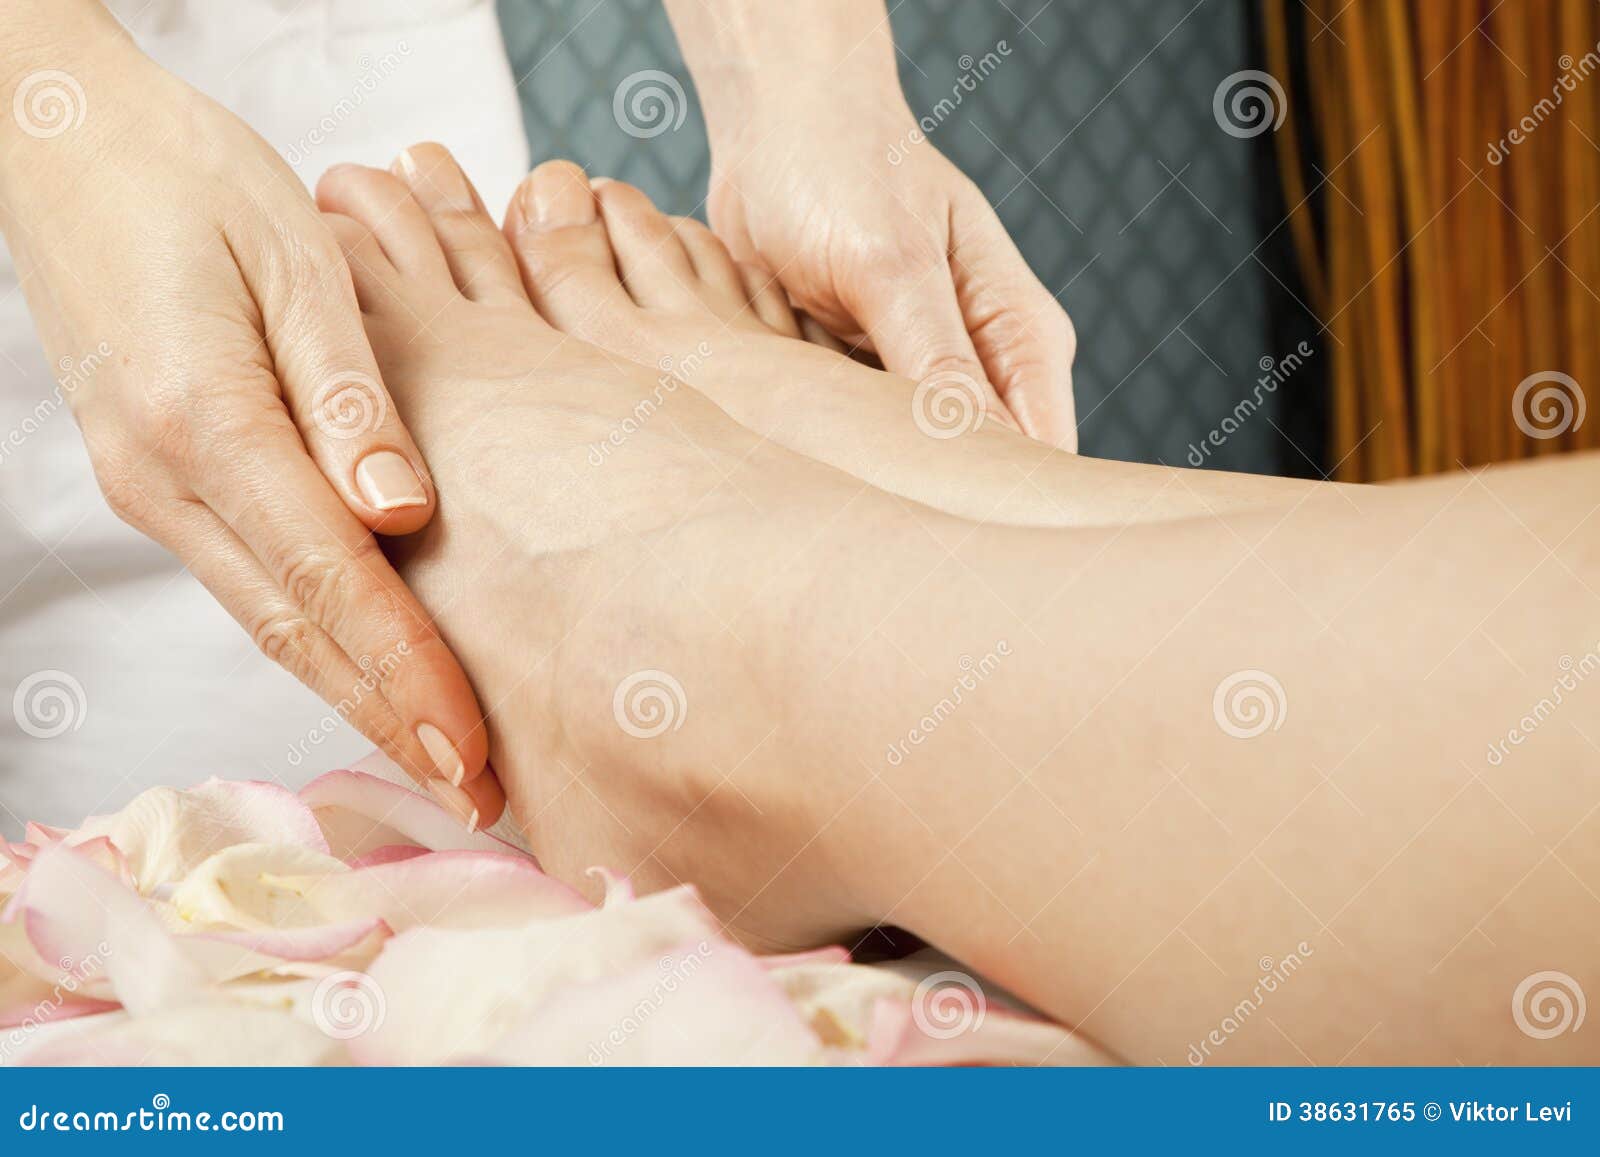 Foot Massage Female Legs Stock Image Image Of Pamper 386317